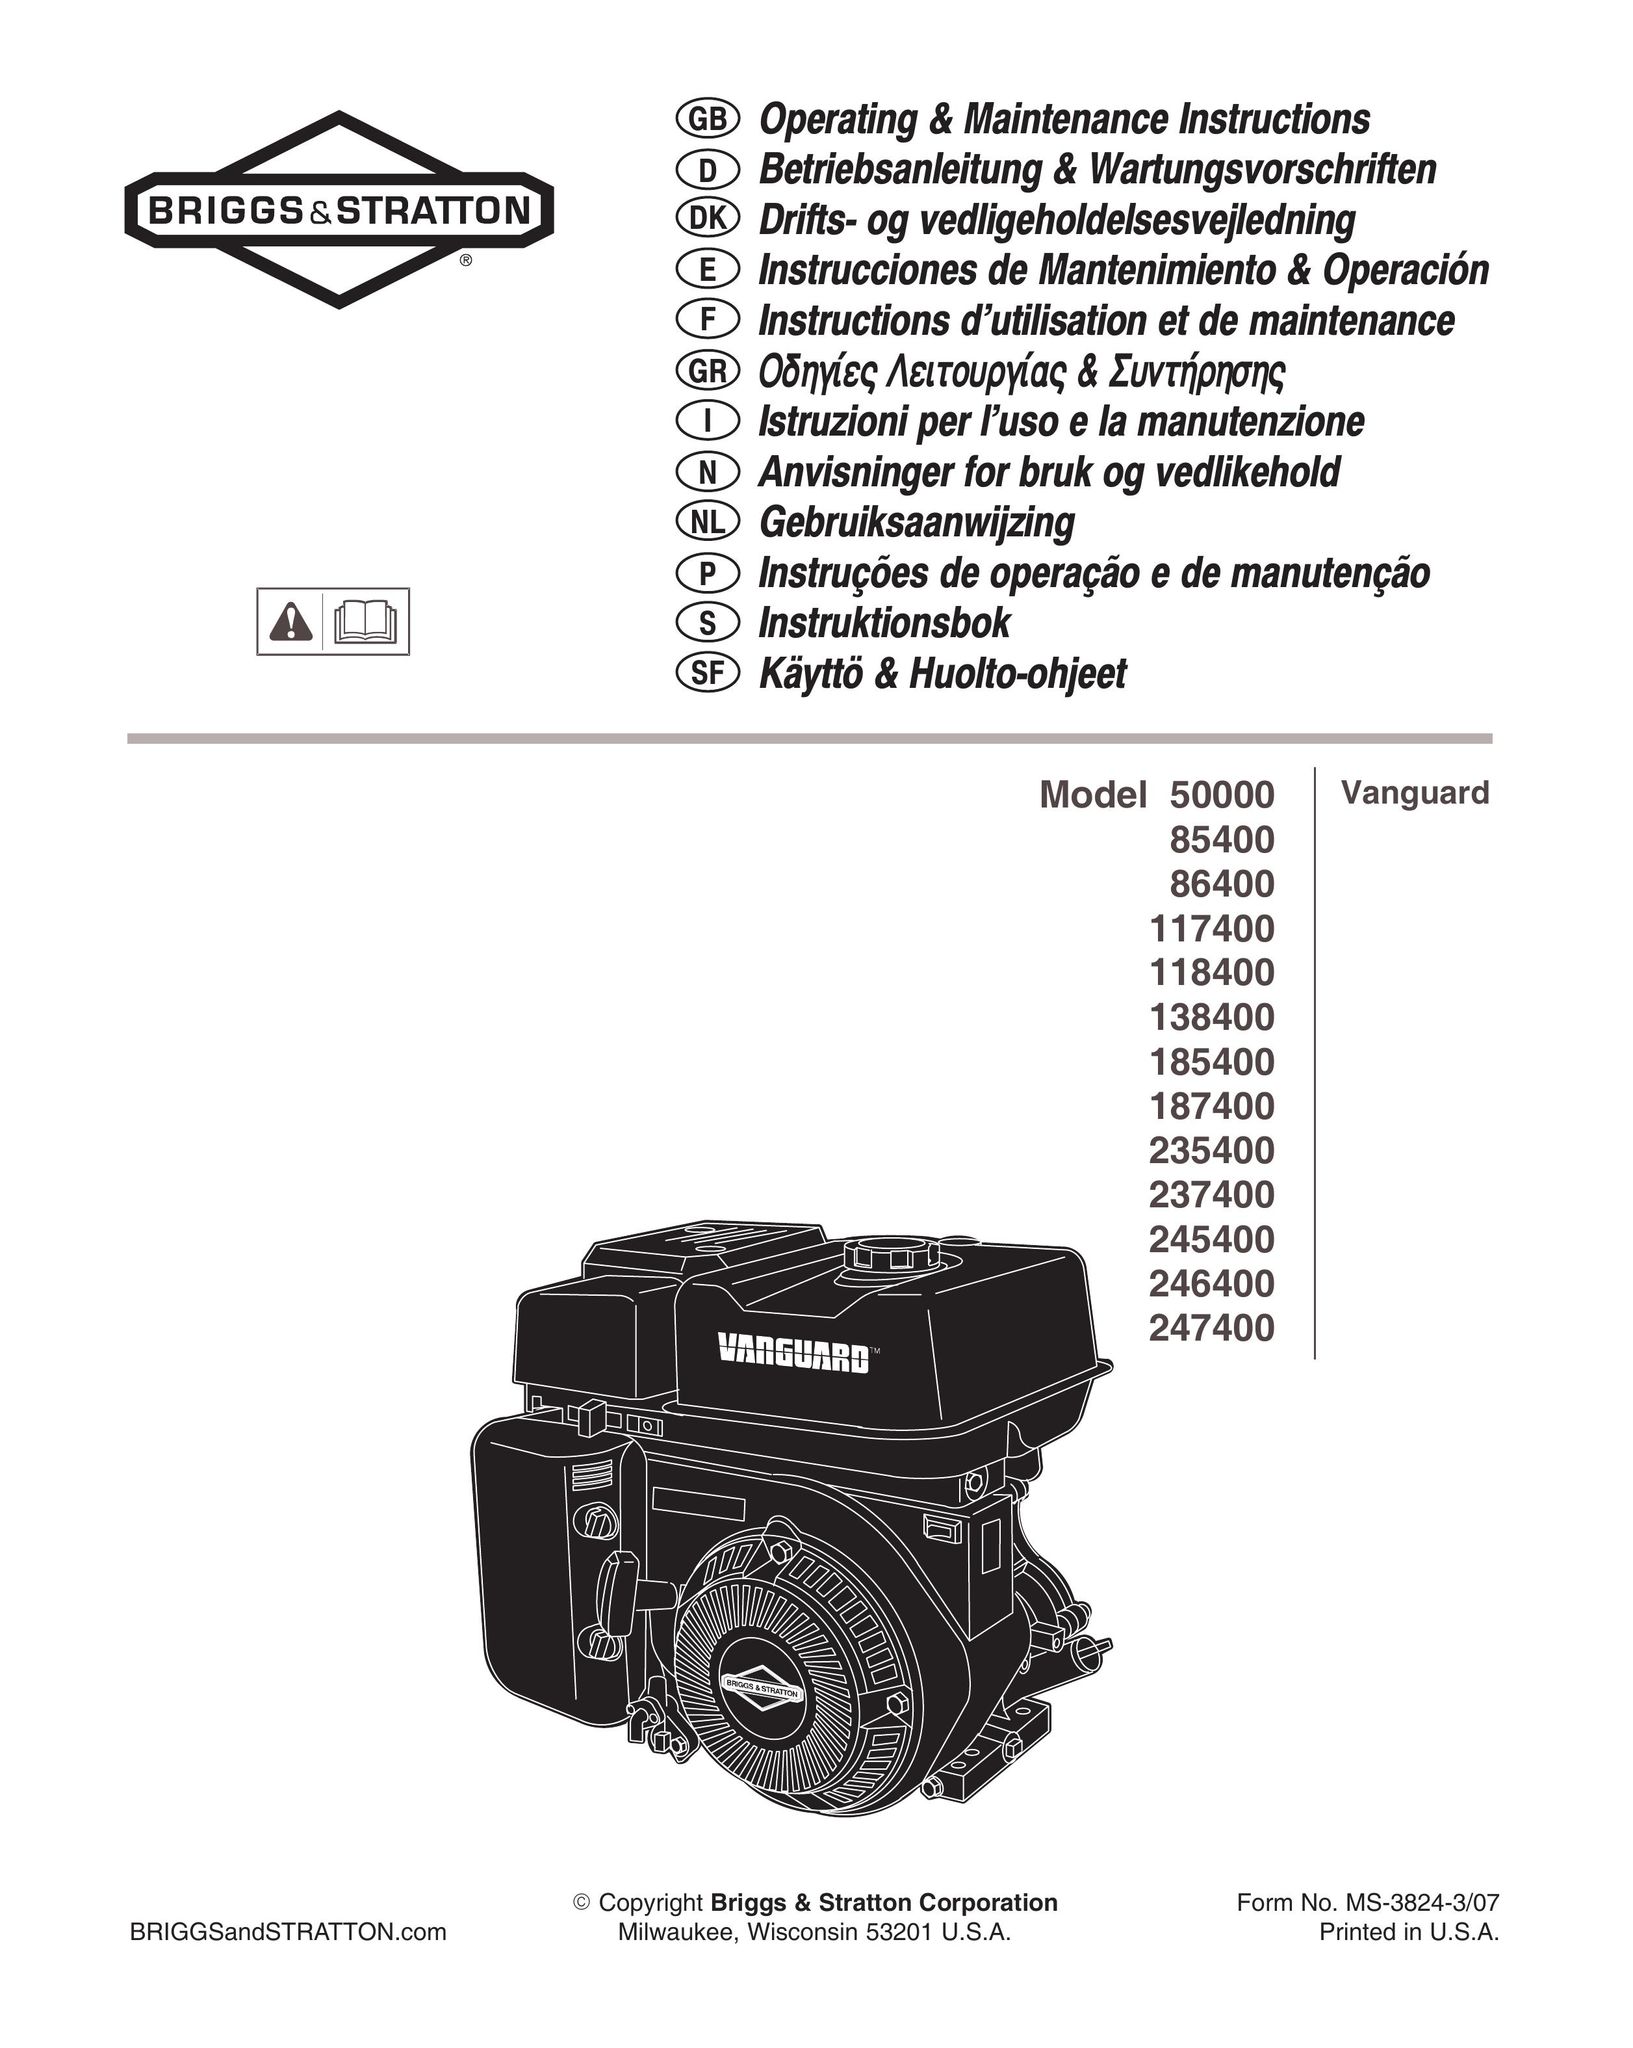 Briggs & Stratton 118400 Plumbing Product User Manual